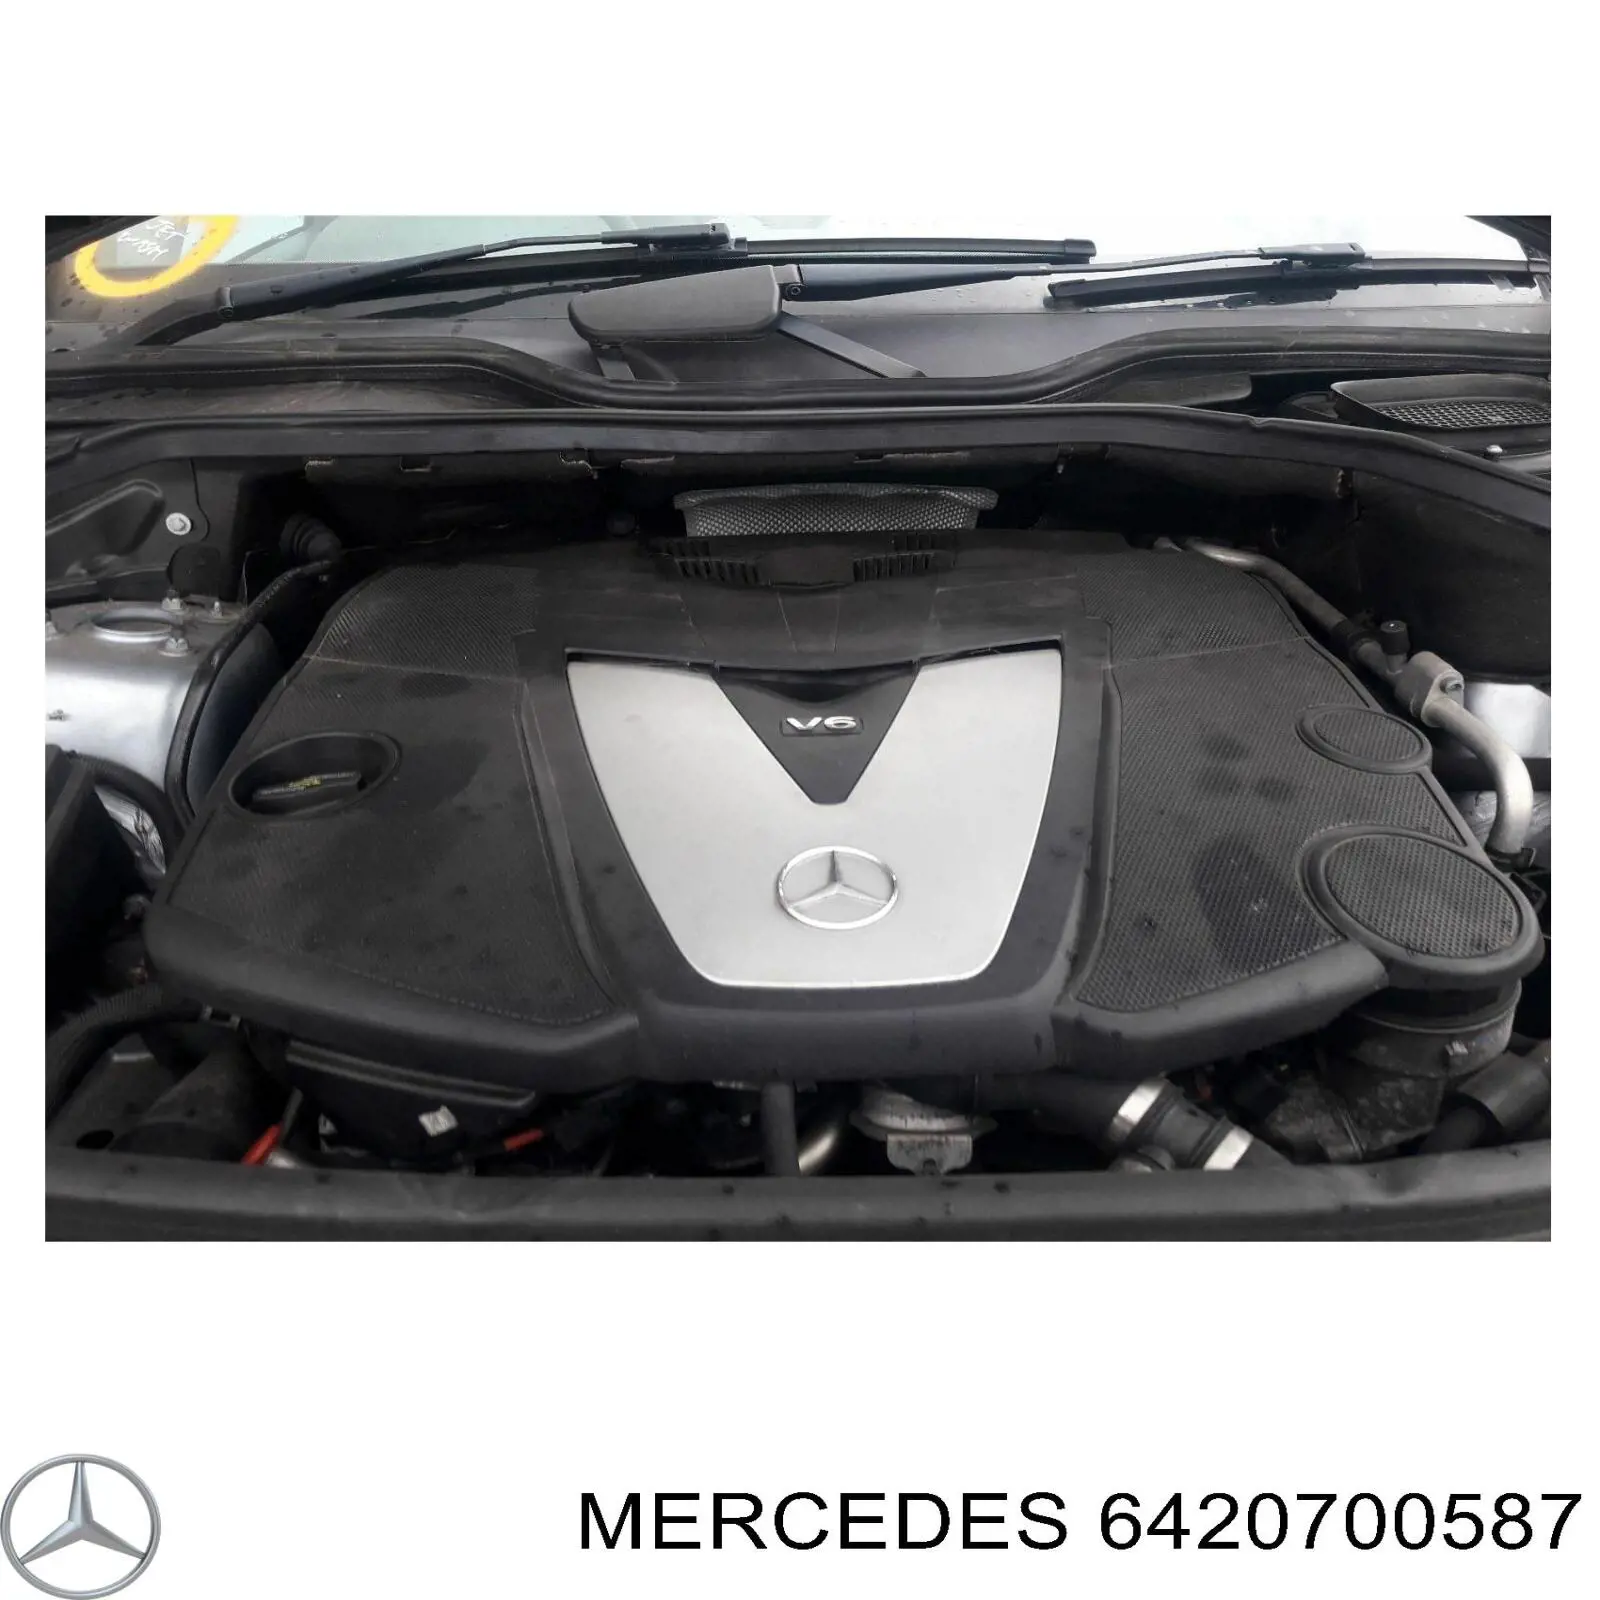 6420700587 Mercedes injetor de injeção de combustível